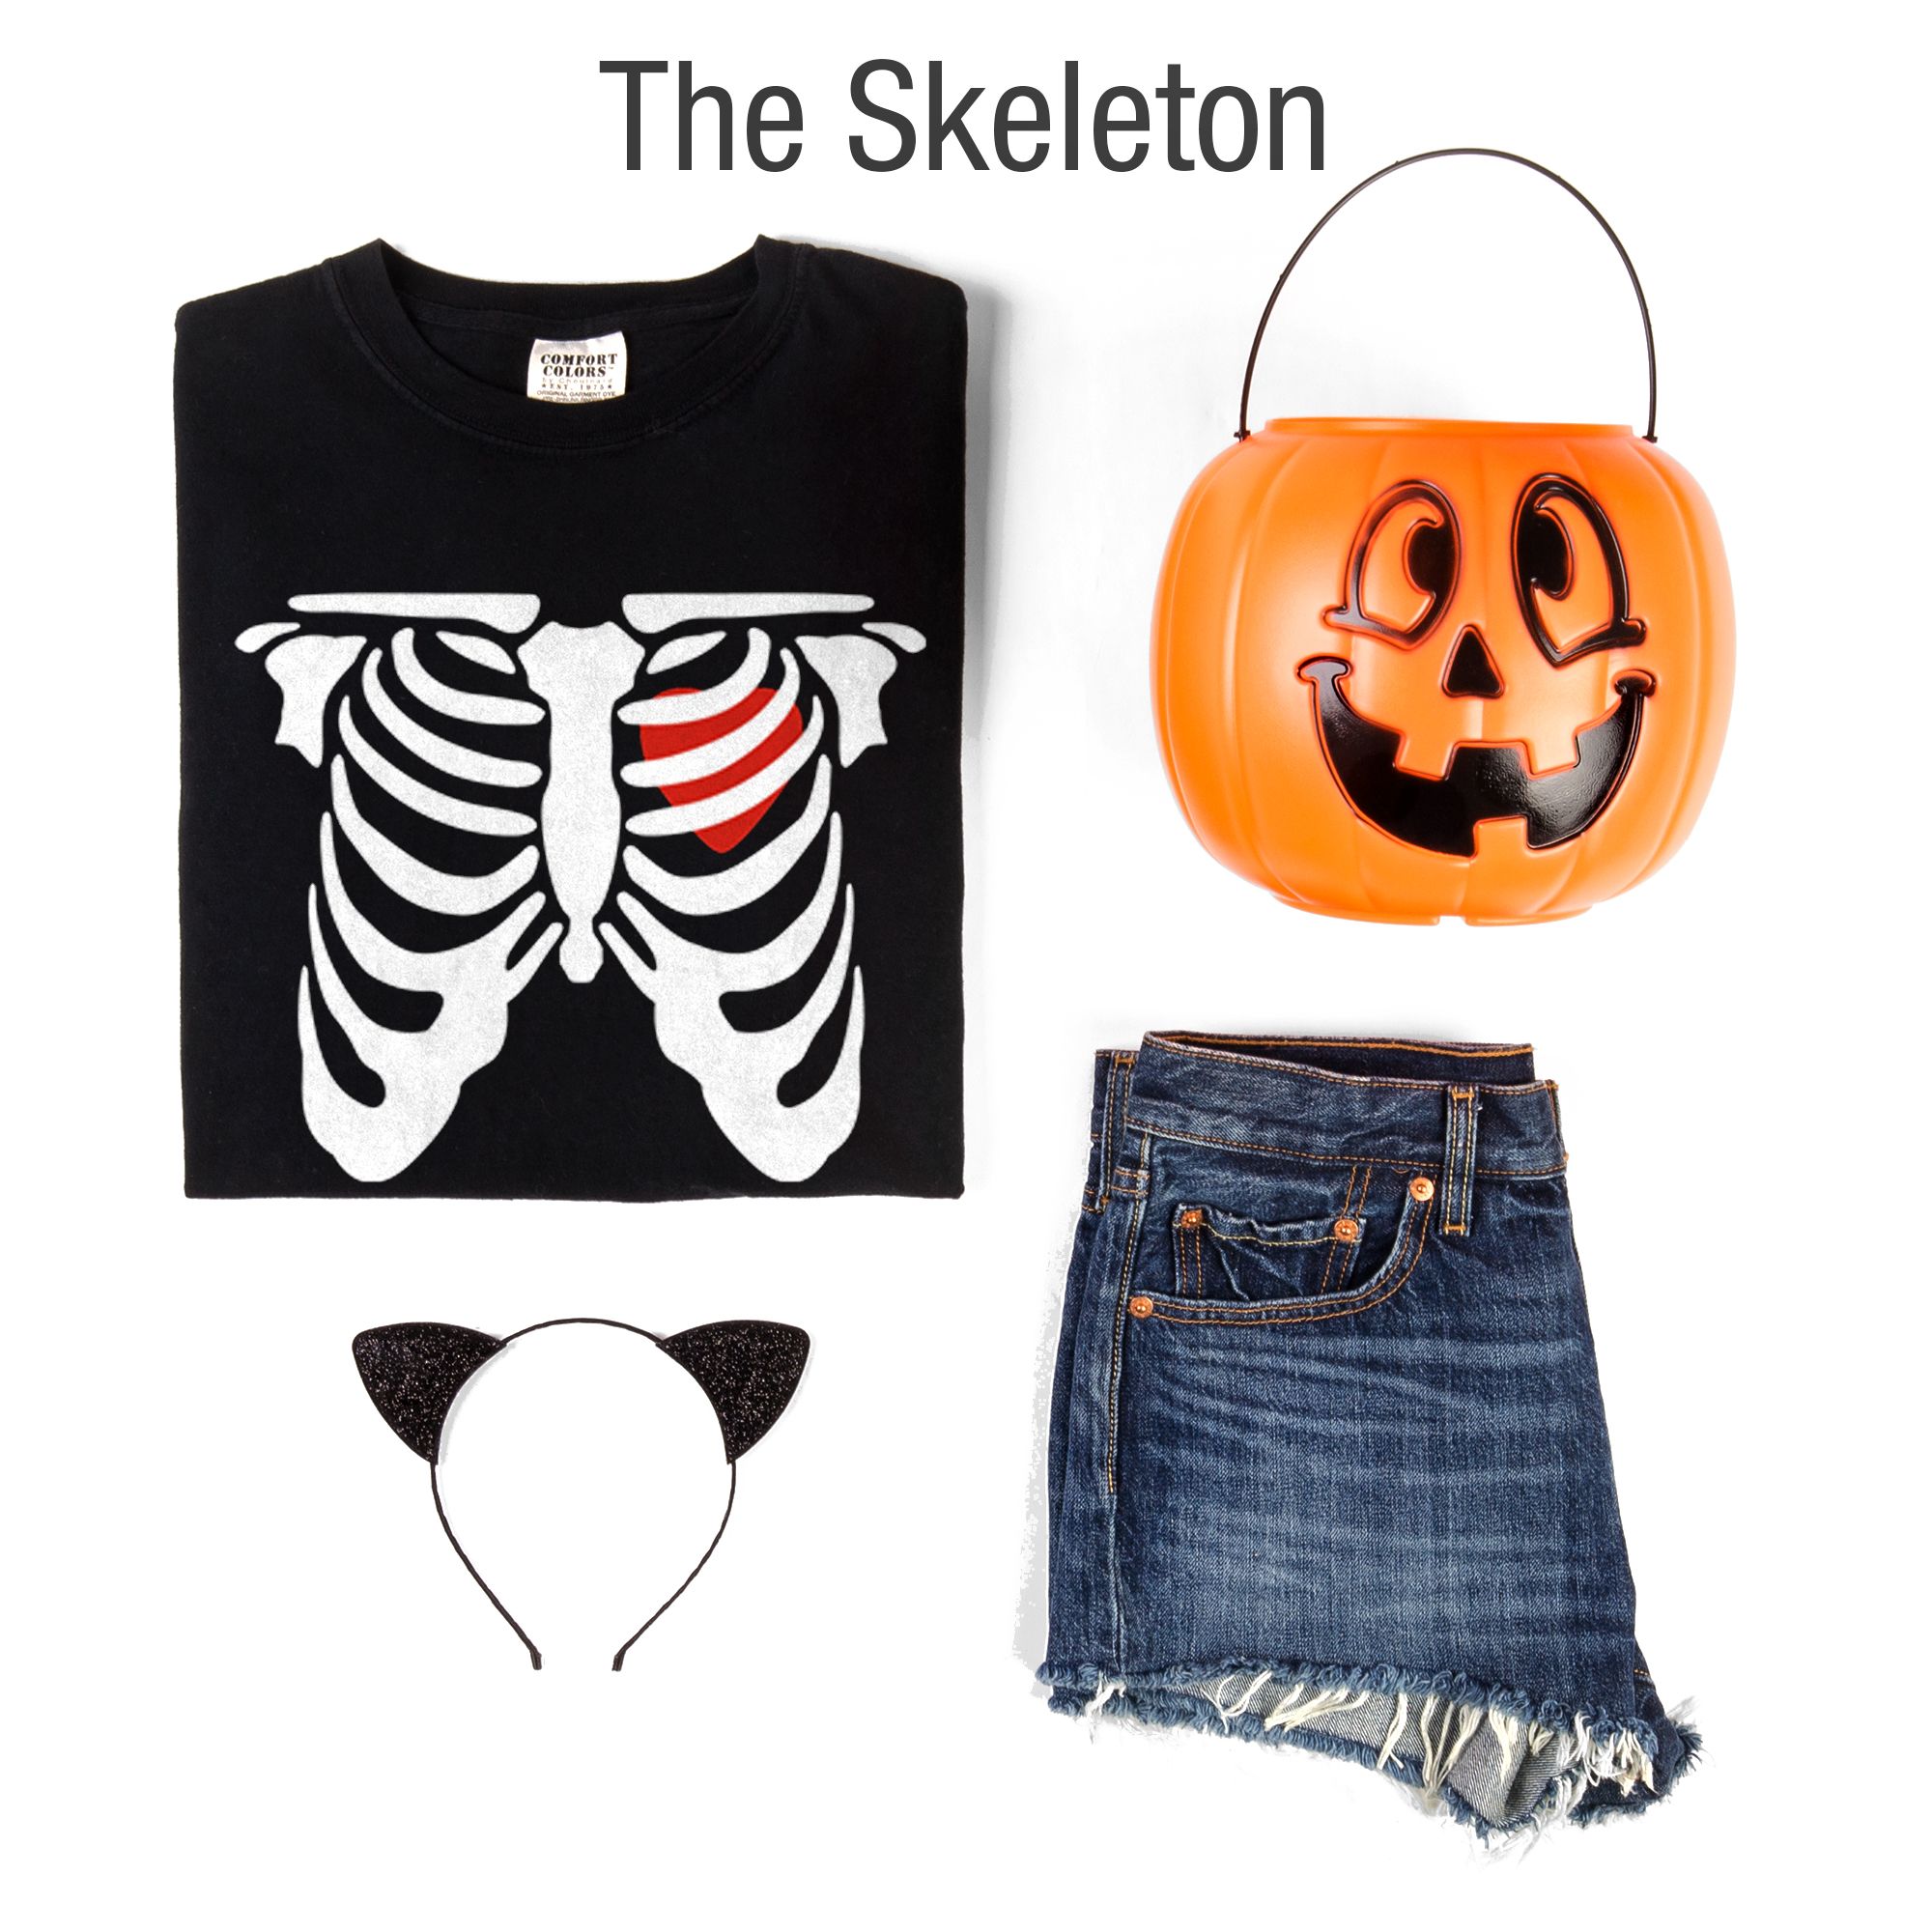 Our Skeleton example Halloween costume.